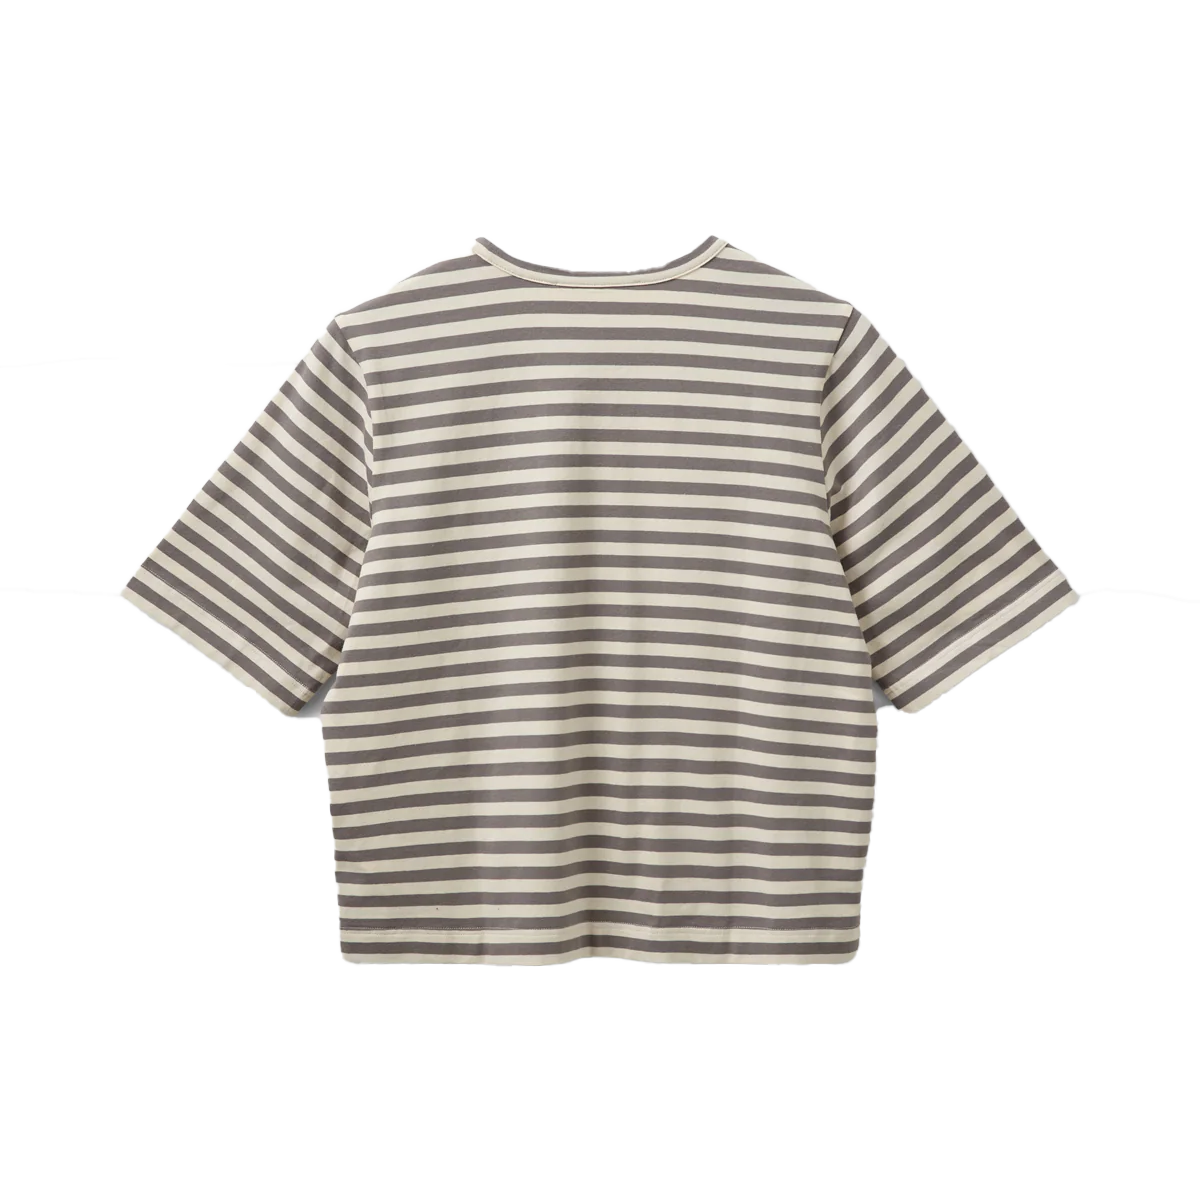 Sofie Schnoor S241280 T-shirt, Grey Striped